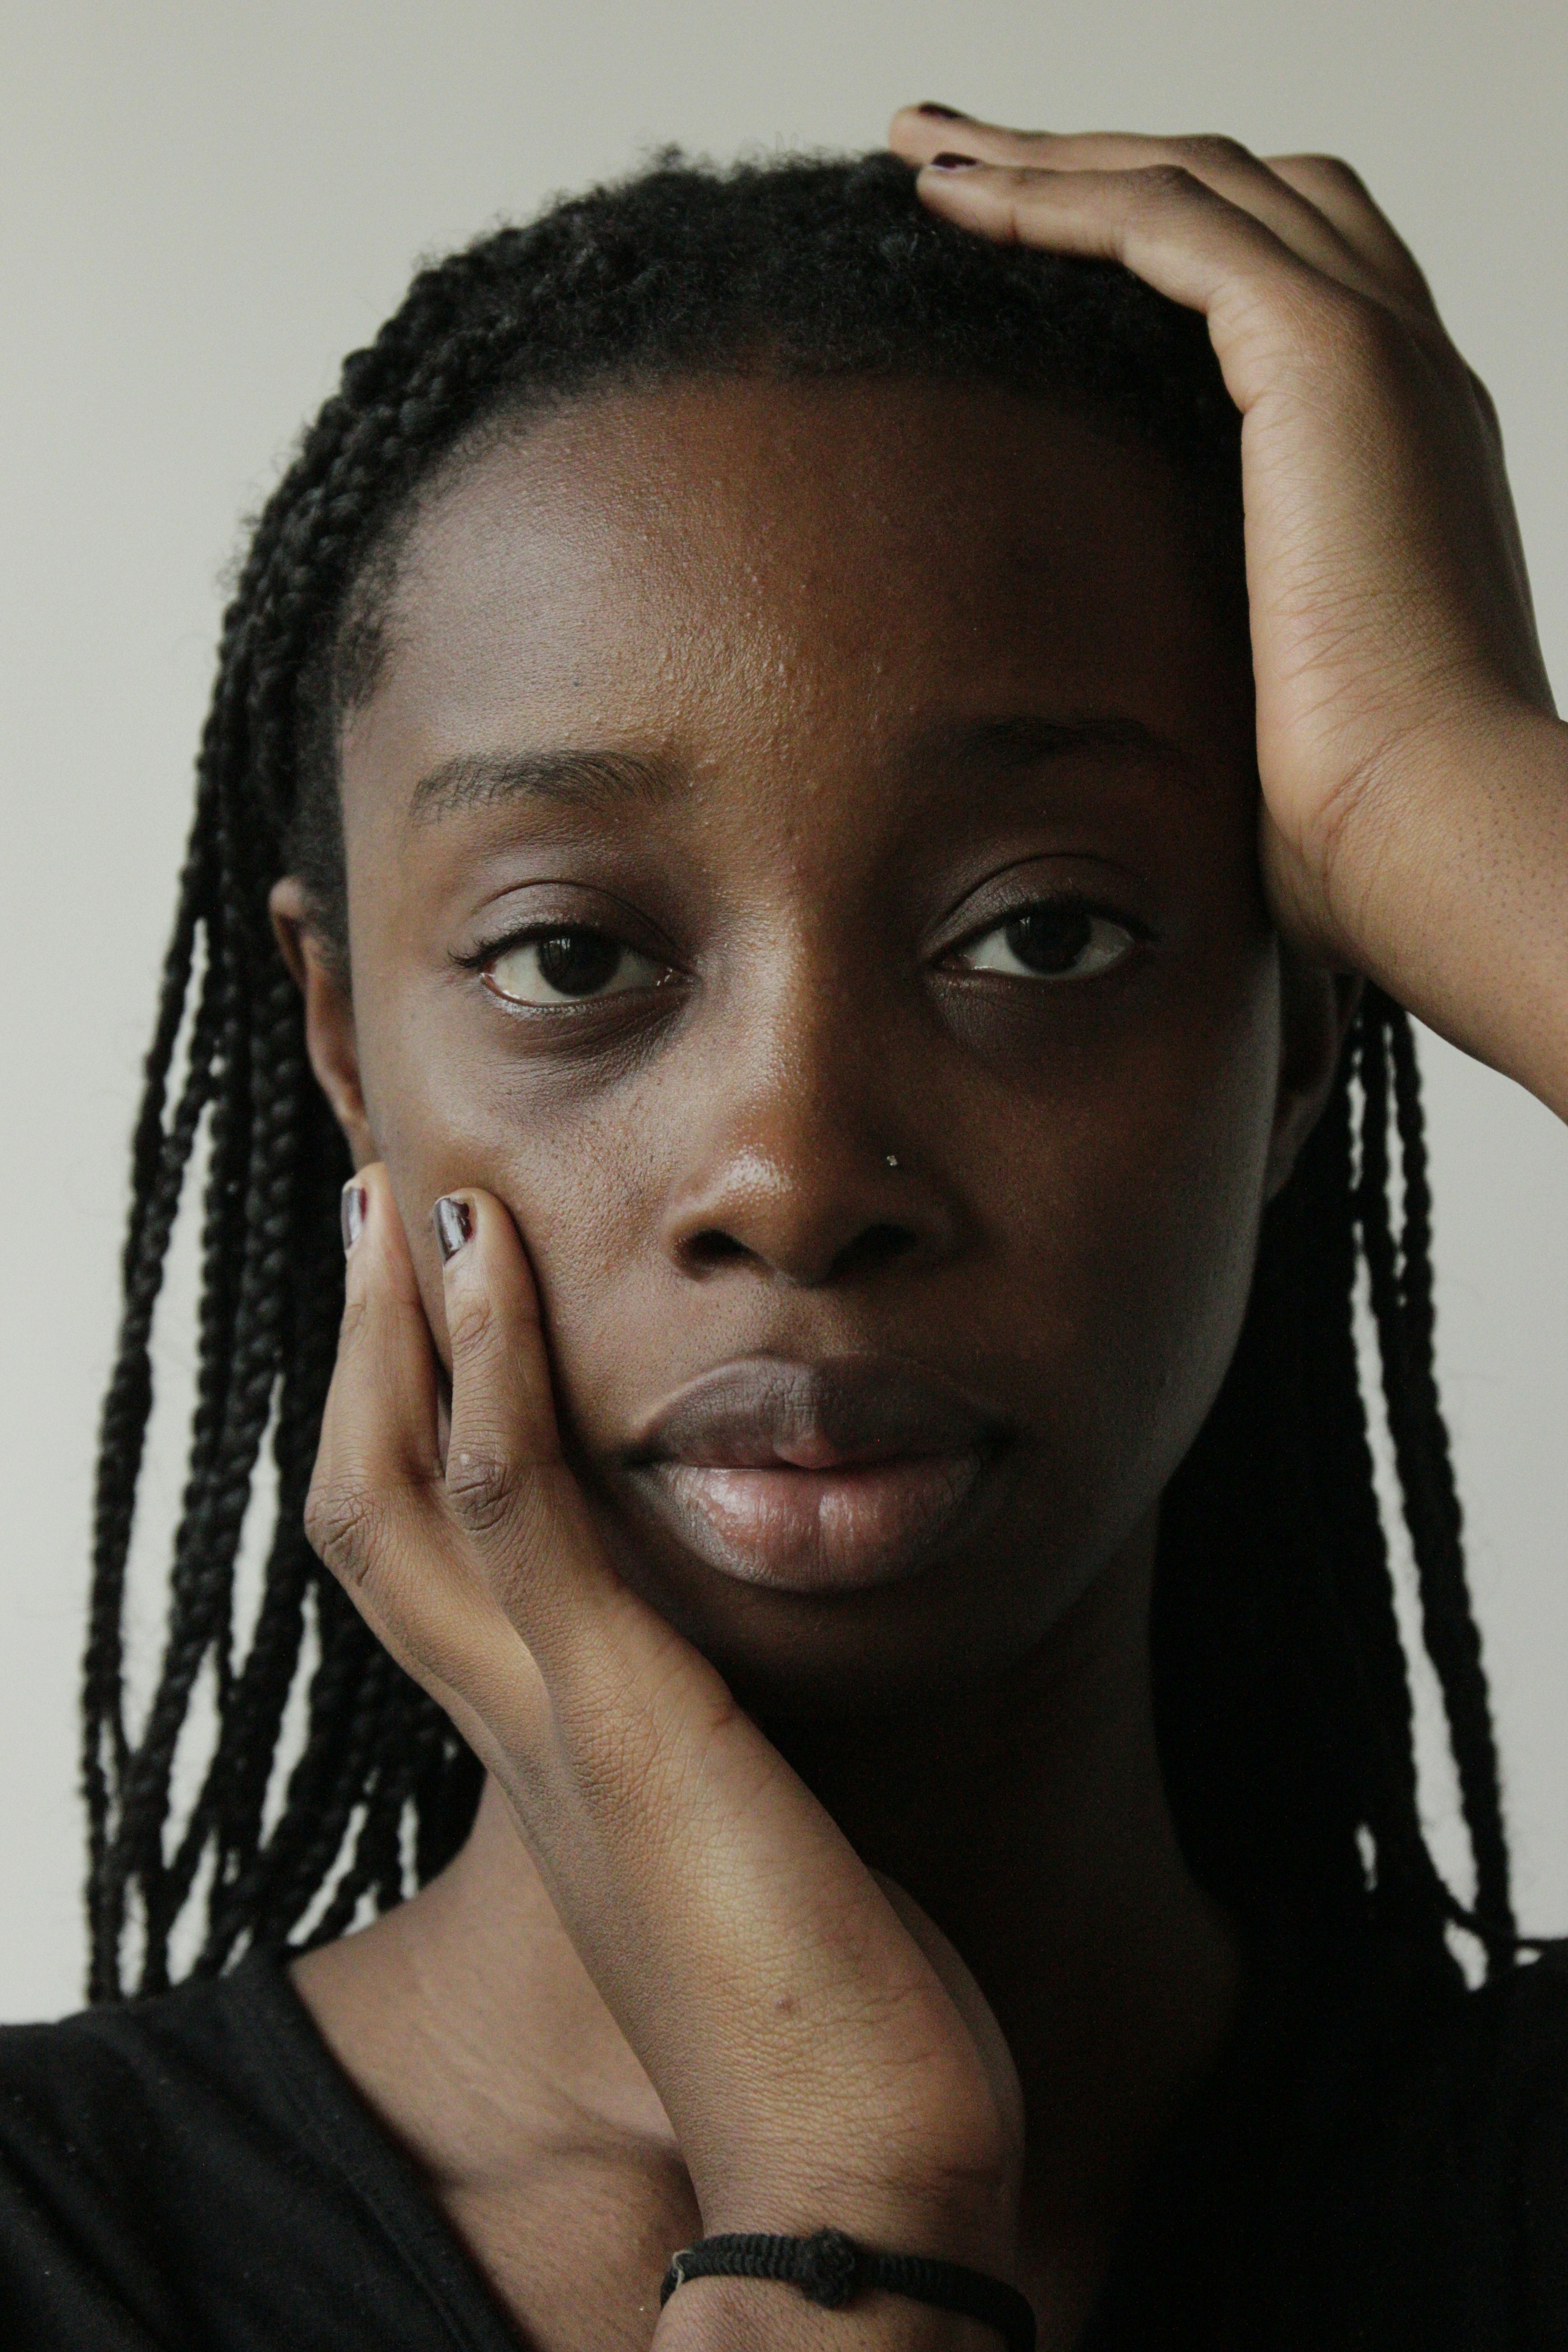 An image of Liome Ogunbiyi